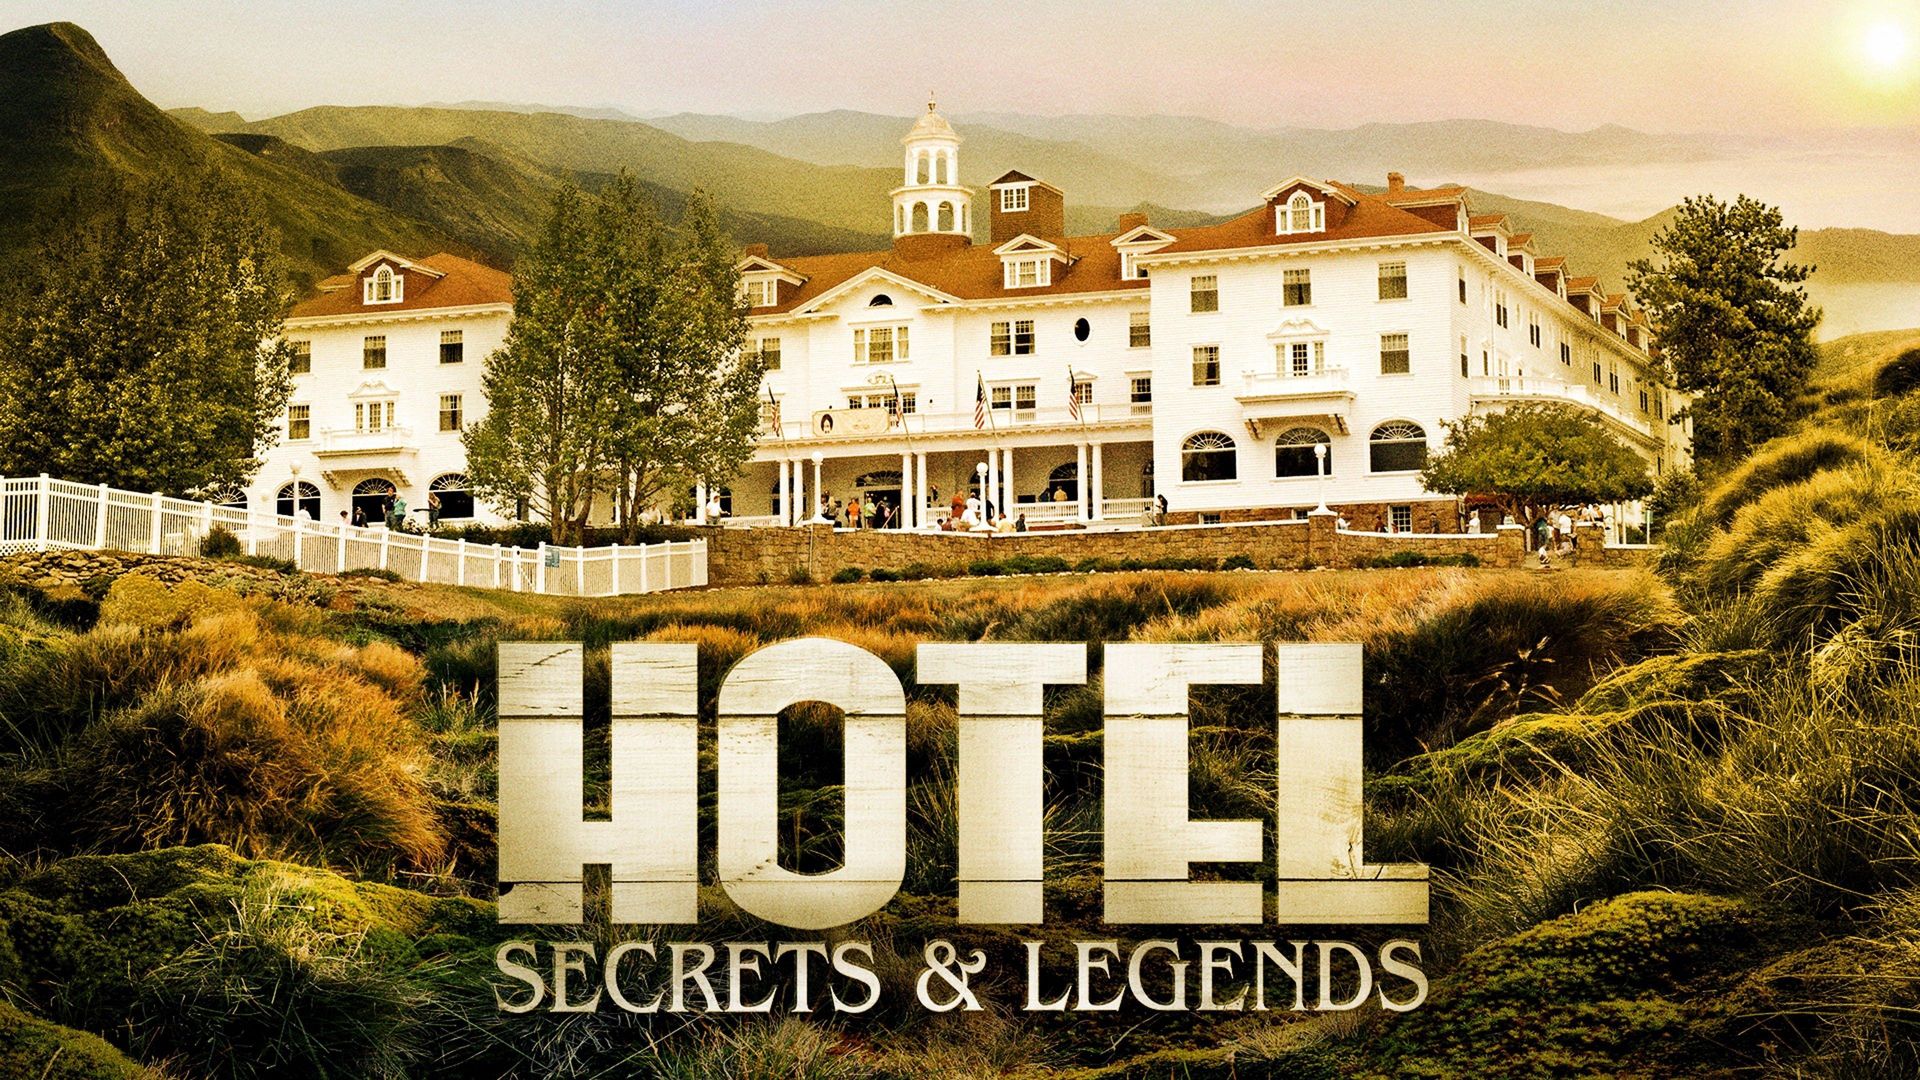 Hotel Secrets & Legends Backdrop